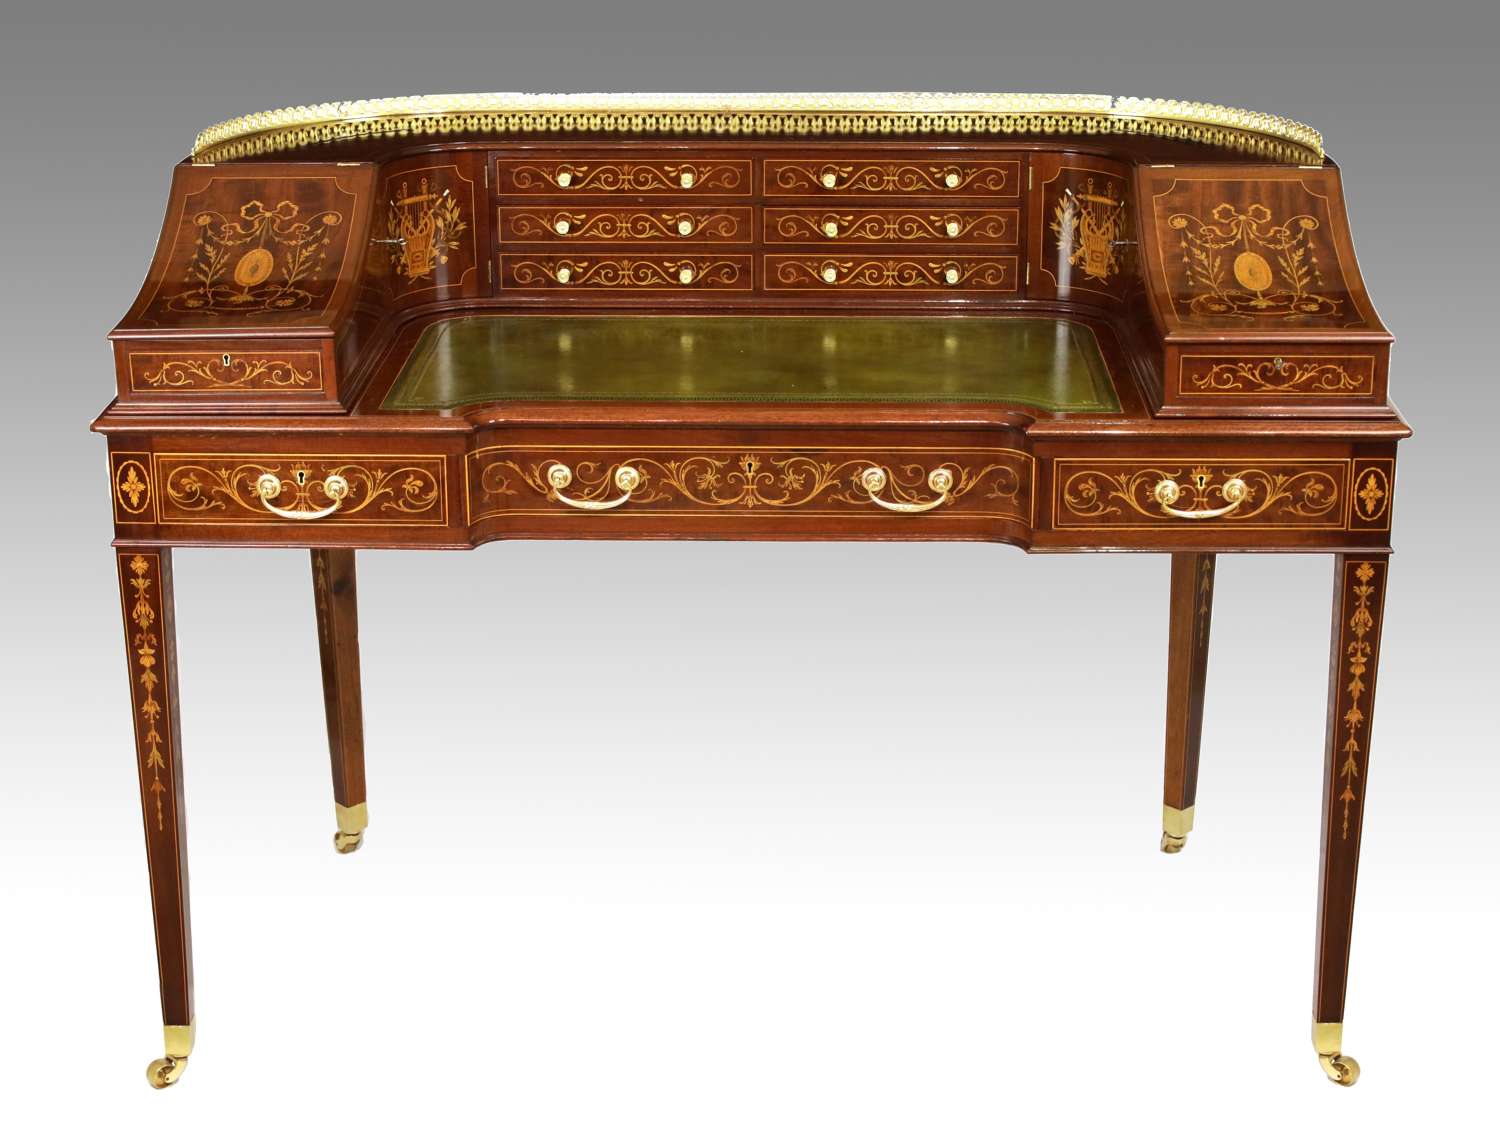 An Exhibition Quality Victorian Inlaid Mahogany Carlton House desk